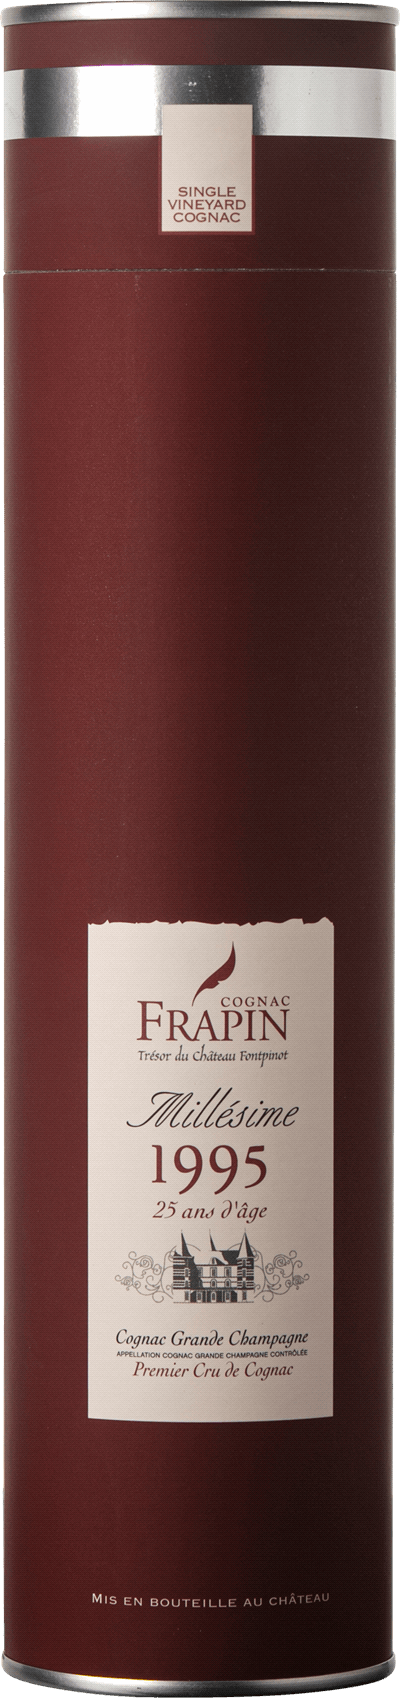 Cognac Frapin Millesime 1995, Premier Cru de Cognac